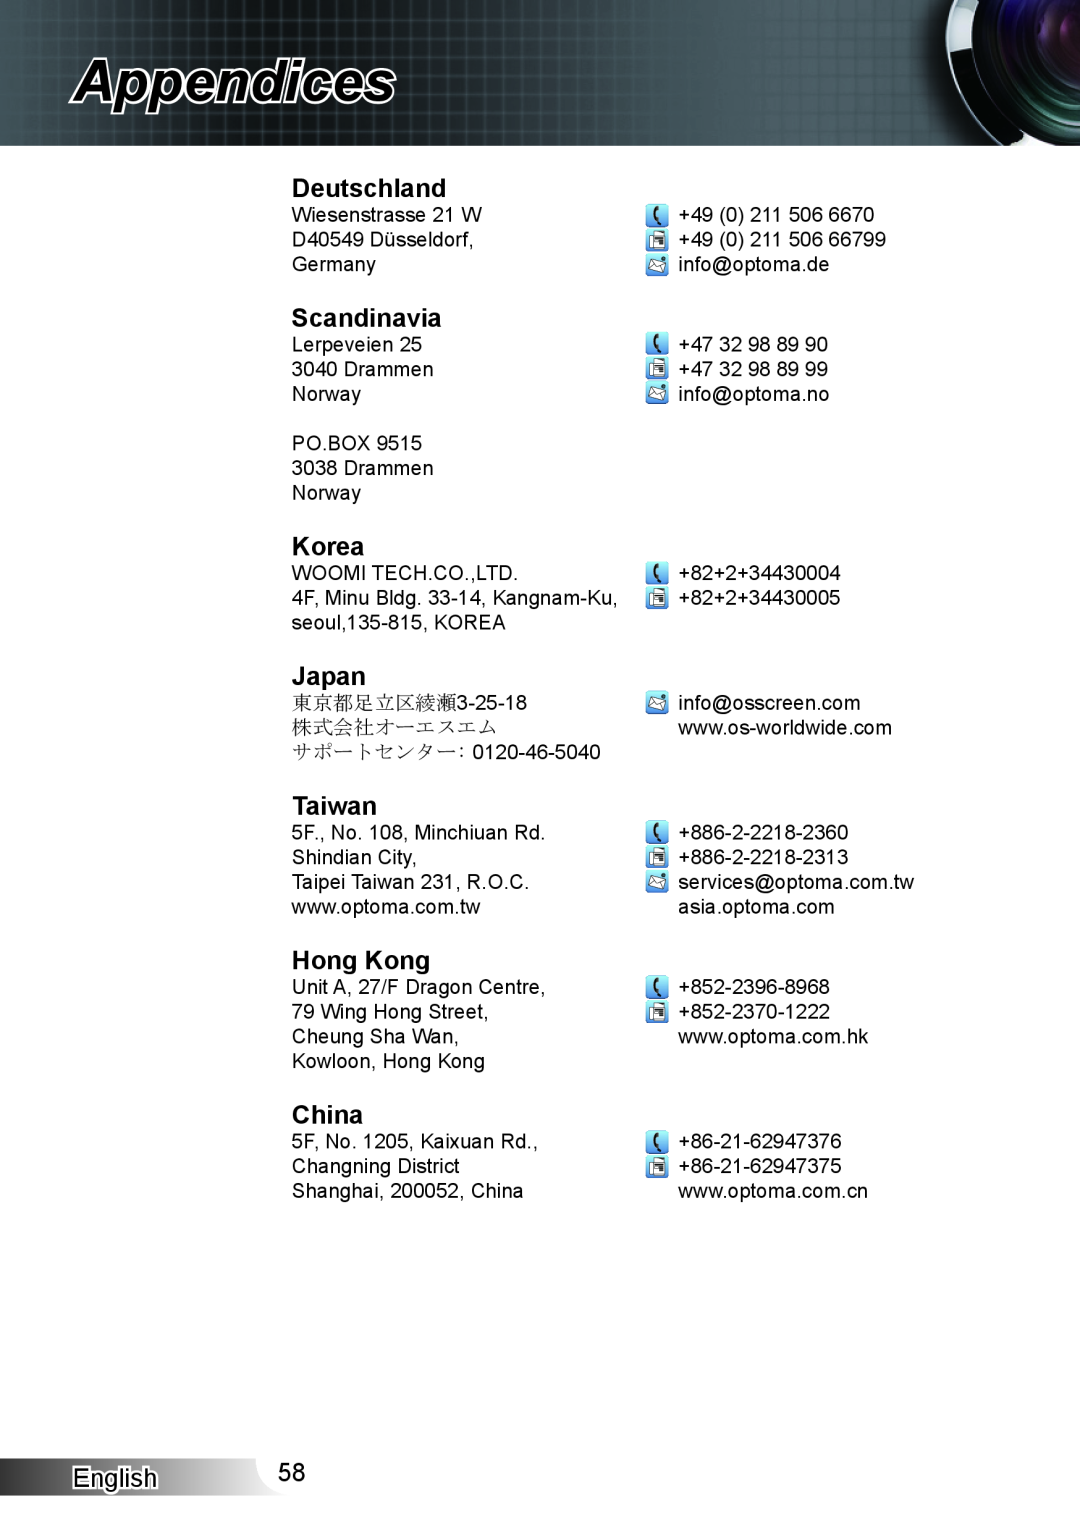 Optoma Technology XX152 N manual Deutschland, Scandinavia, Korea, Japan, Taiwan, Hong Kong, China, Appendices, English 